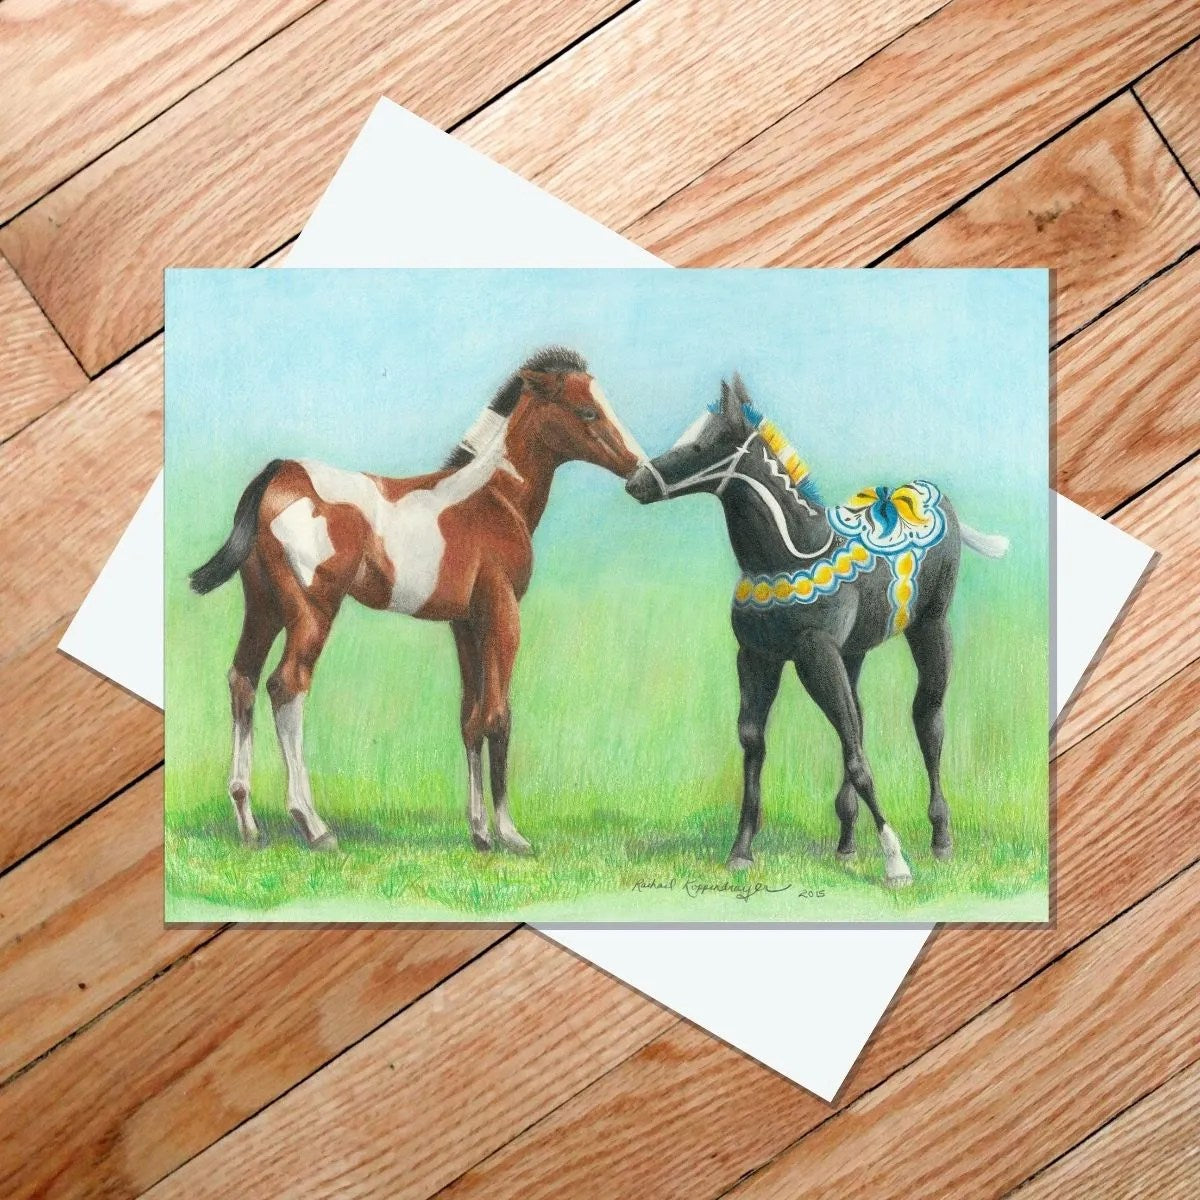 Cards: "Dala Horse Making Friends"